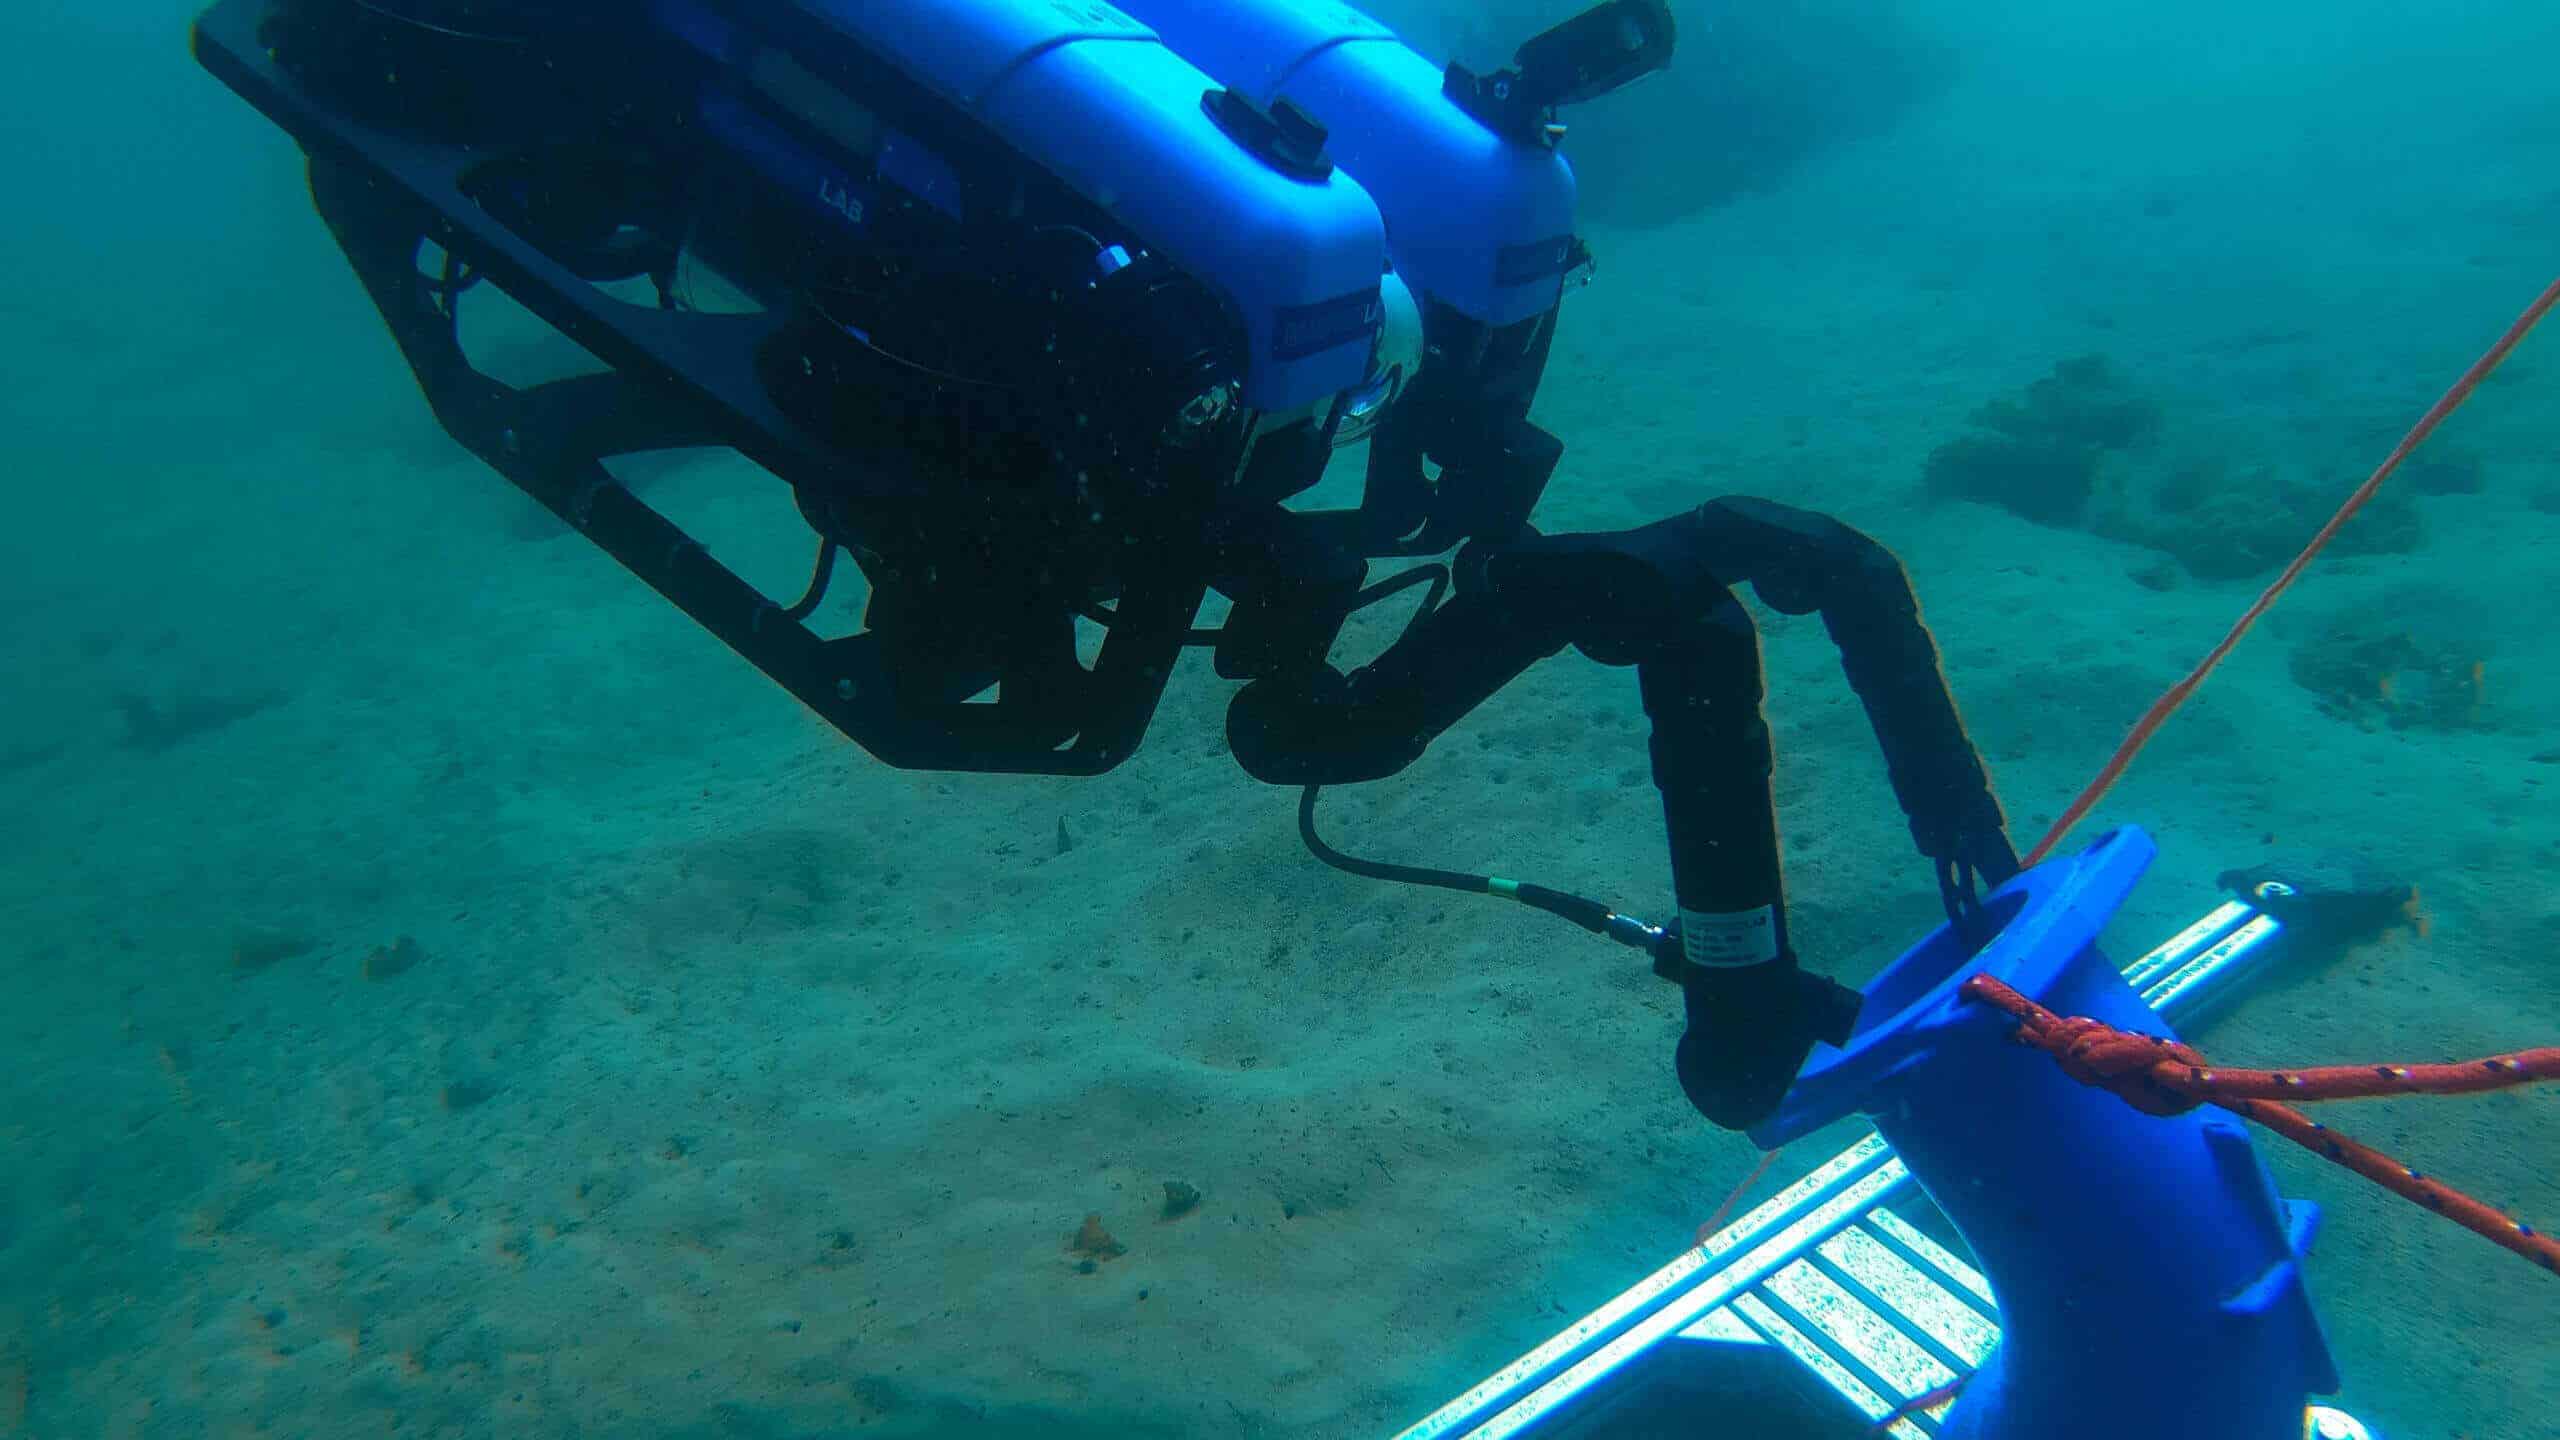 Image on underwater ROV vehicle by Blue print lab.